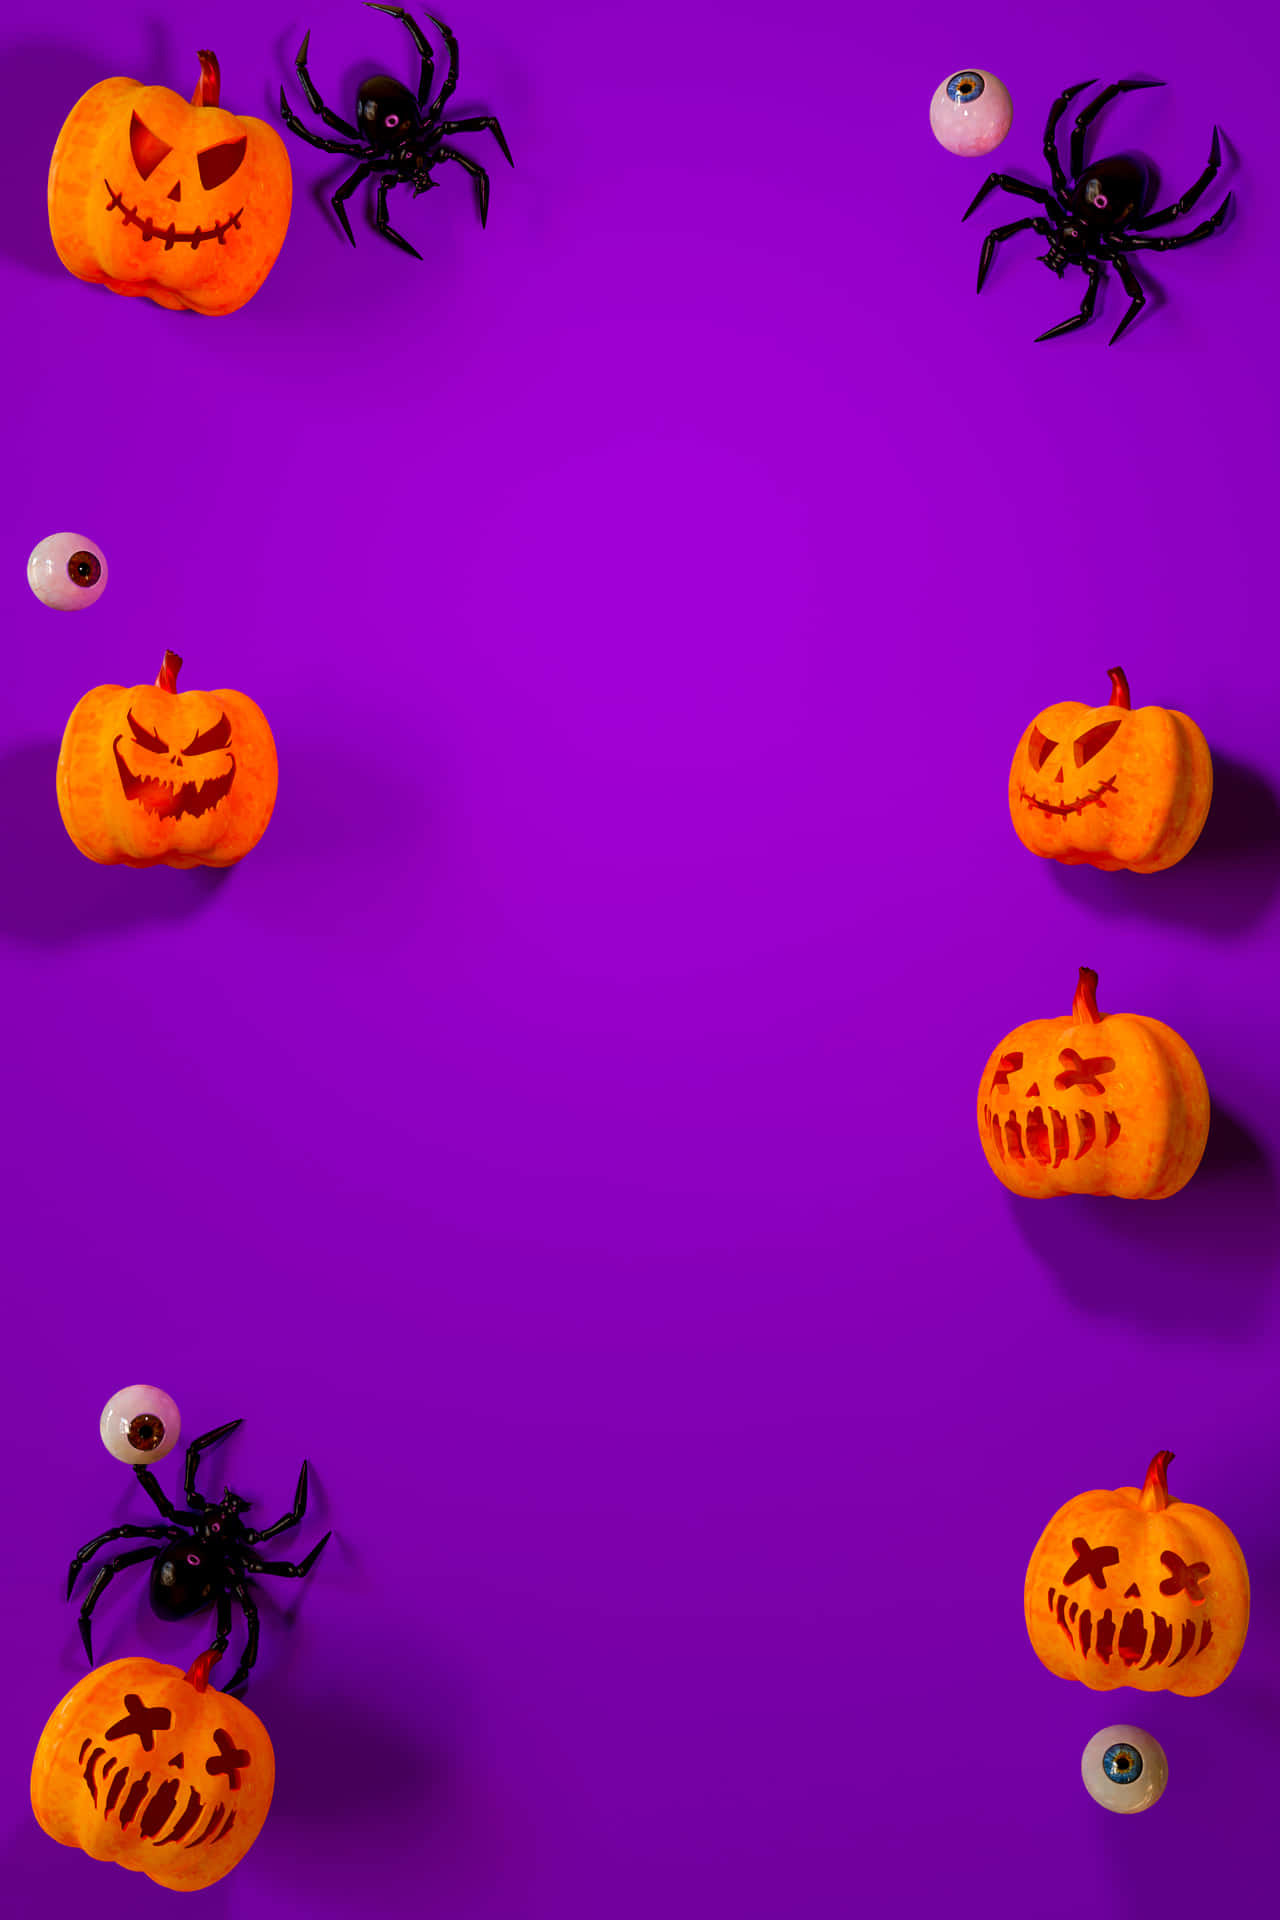 Halloween Pumpkins And Spiders On Purple Background Wallpaper